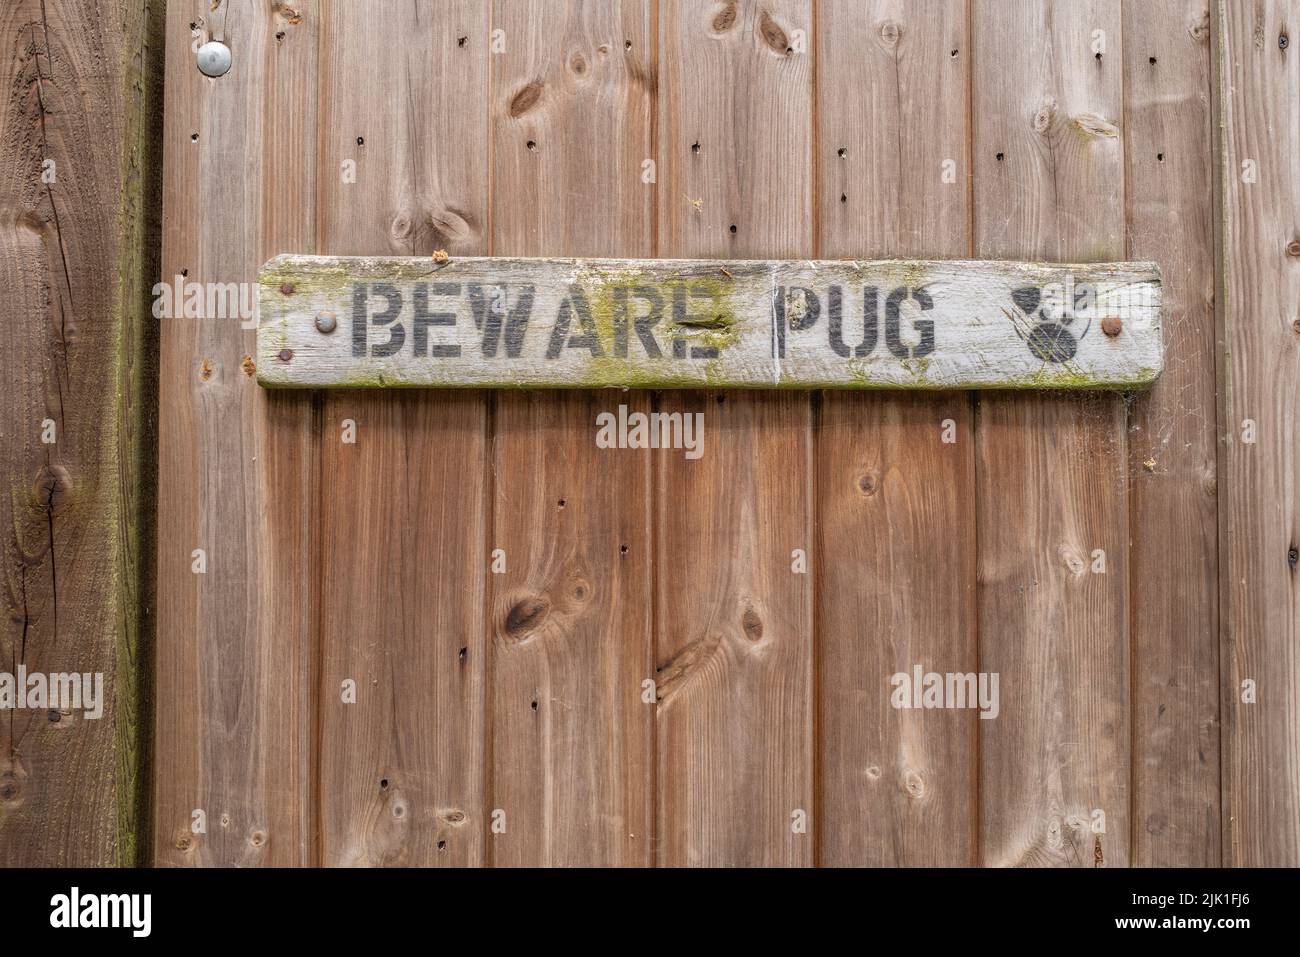 A house gate dispalying Beware Pug sign. Stock Photo